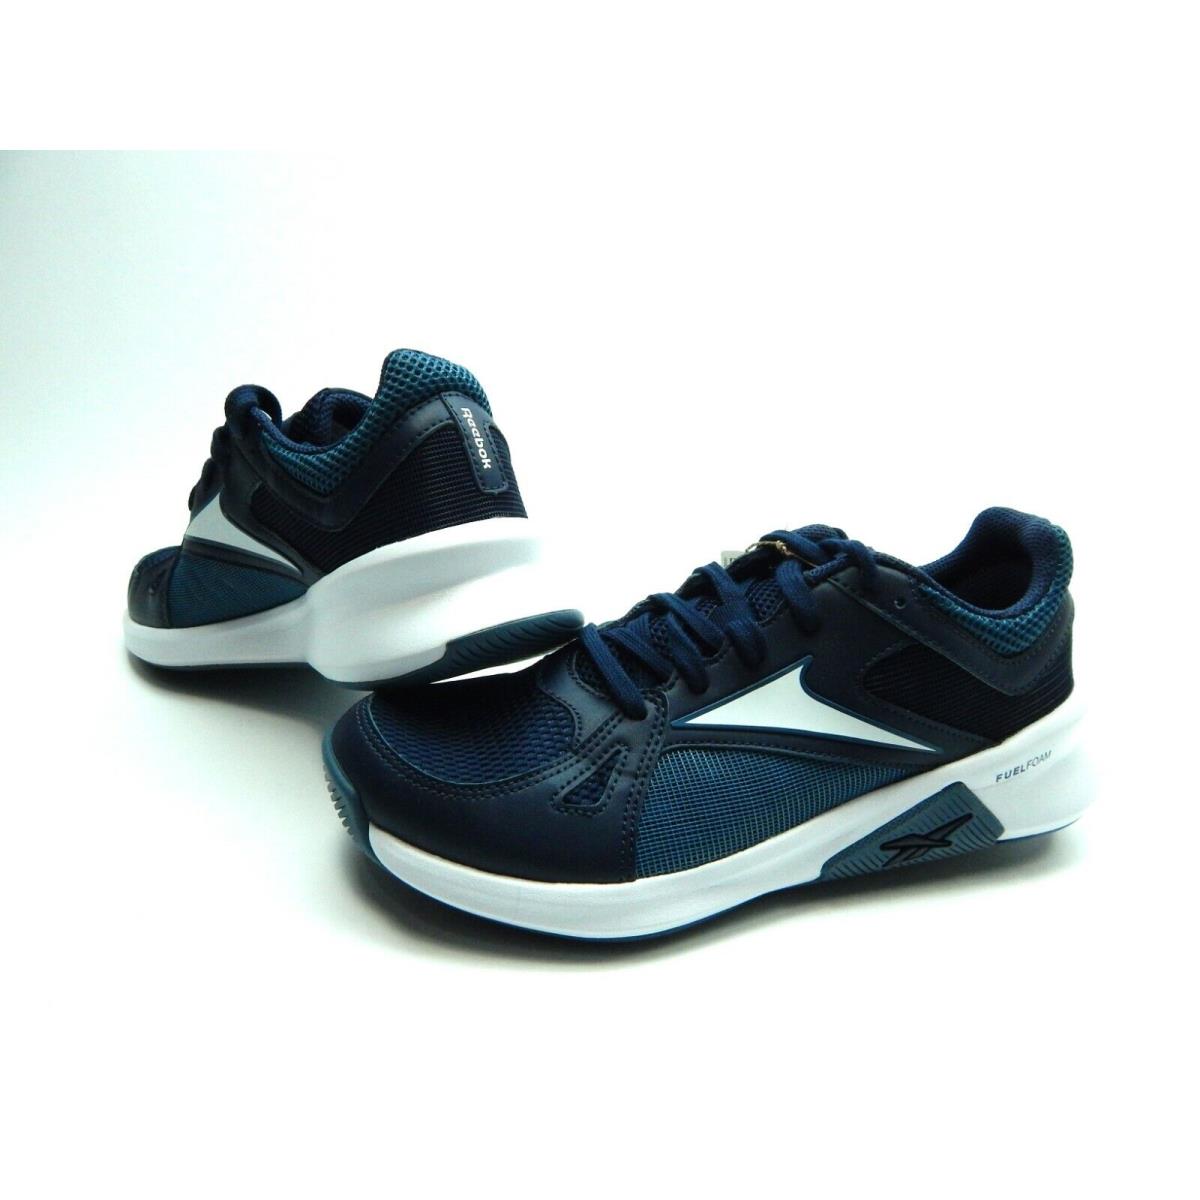 Reebok shoes Advanced Trainette - blue white 4